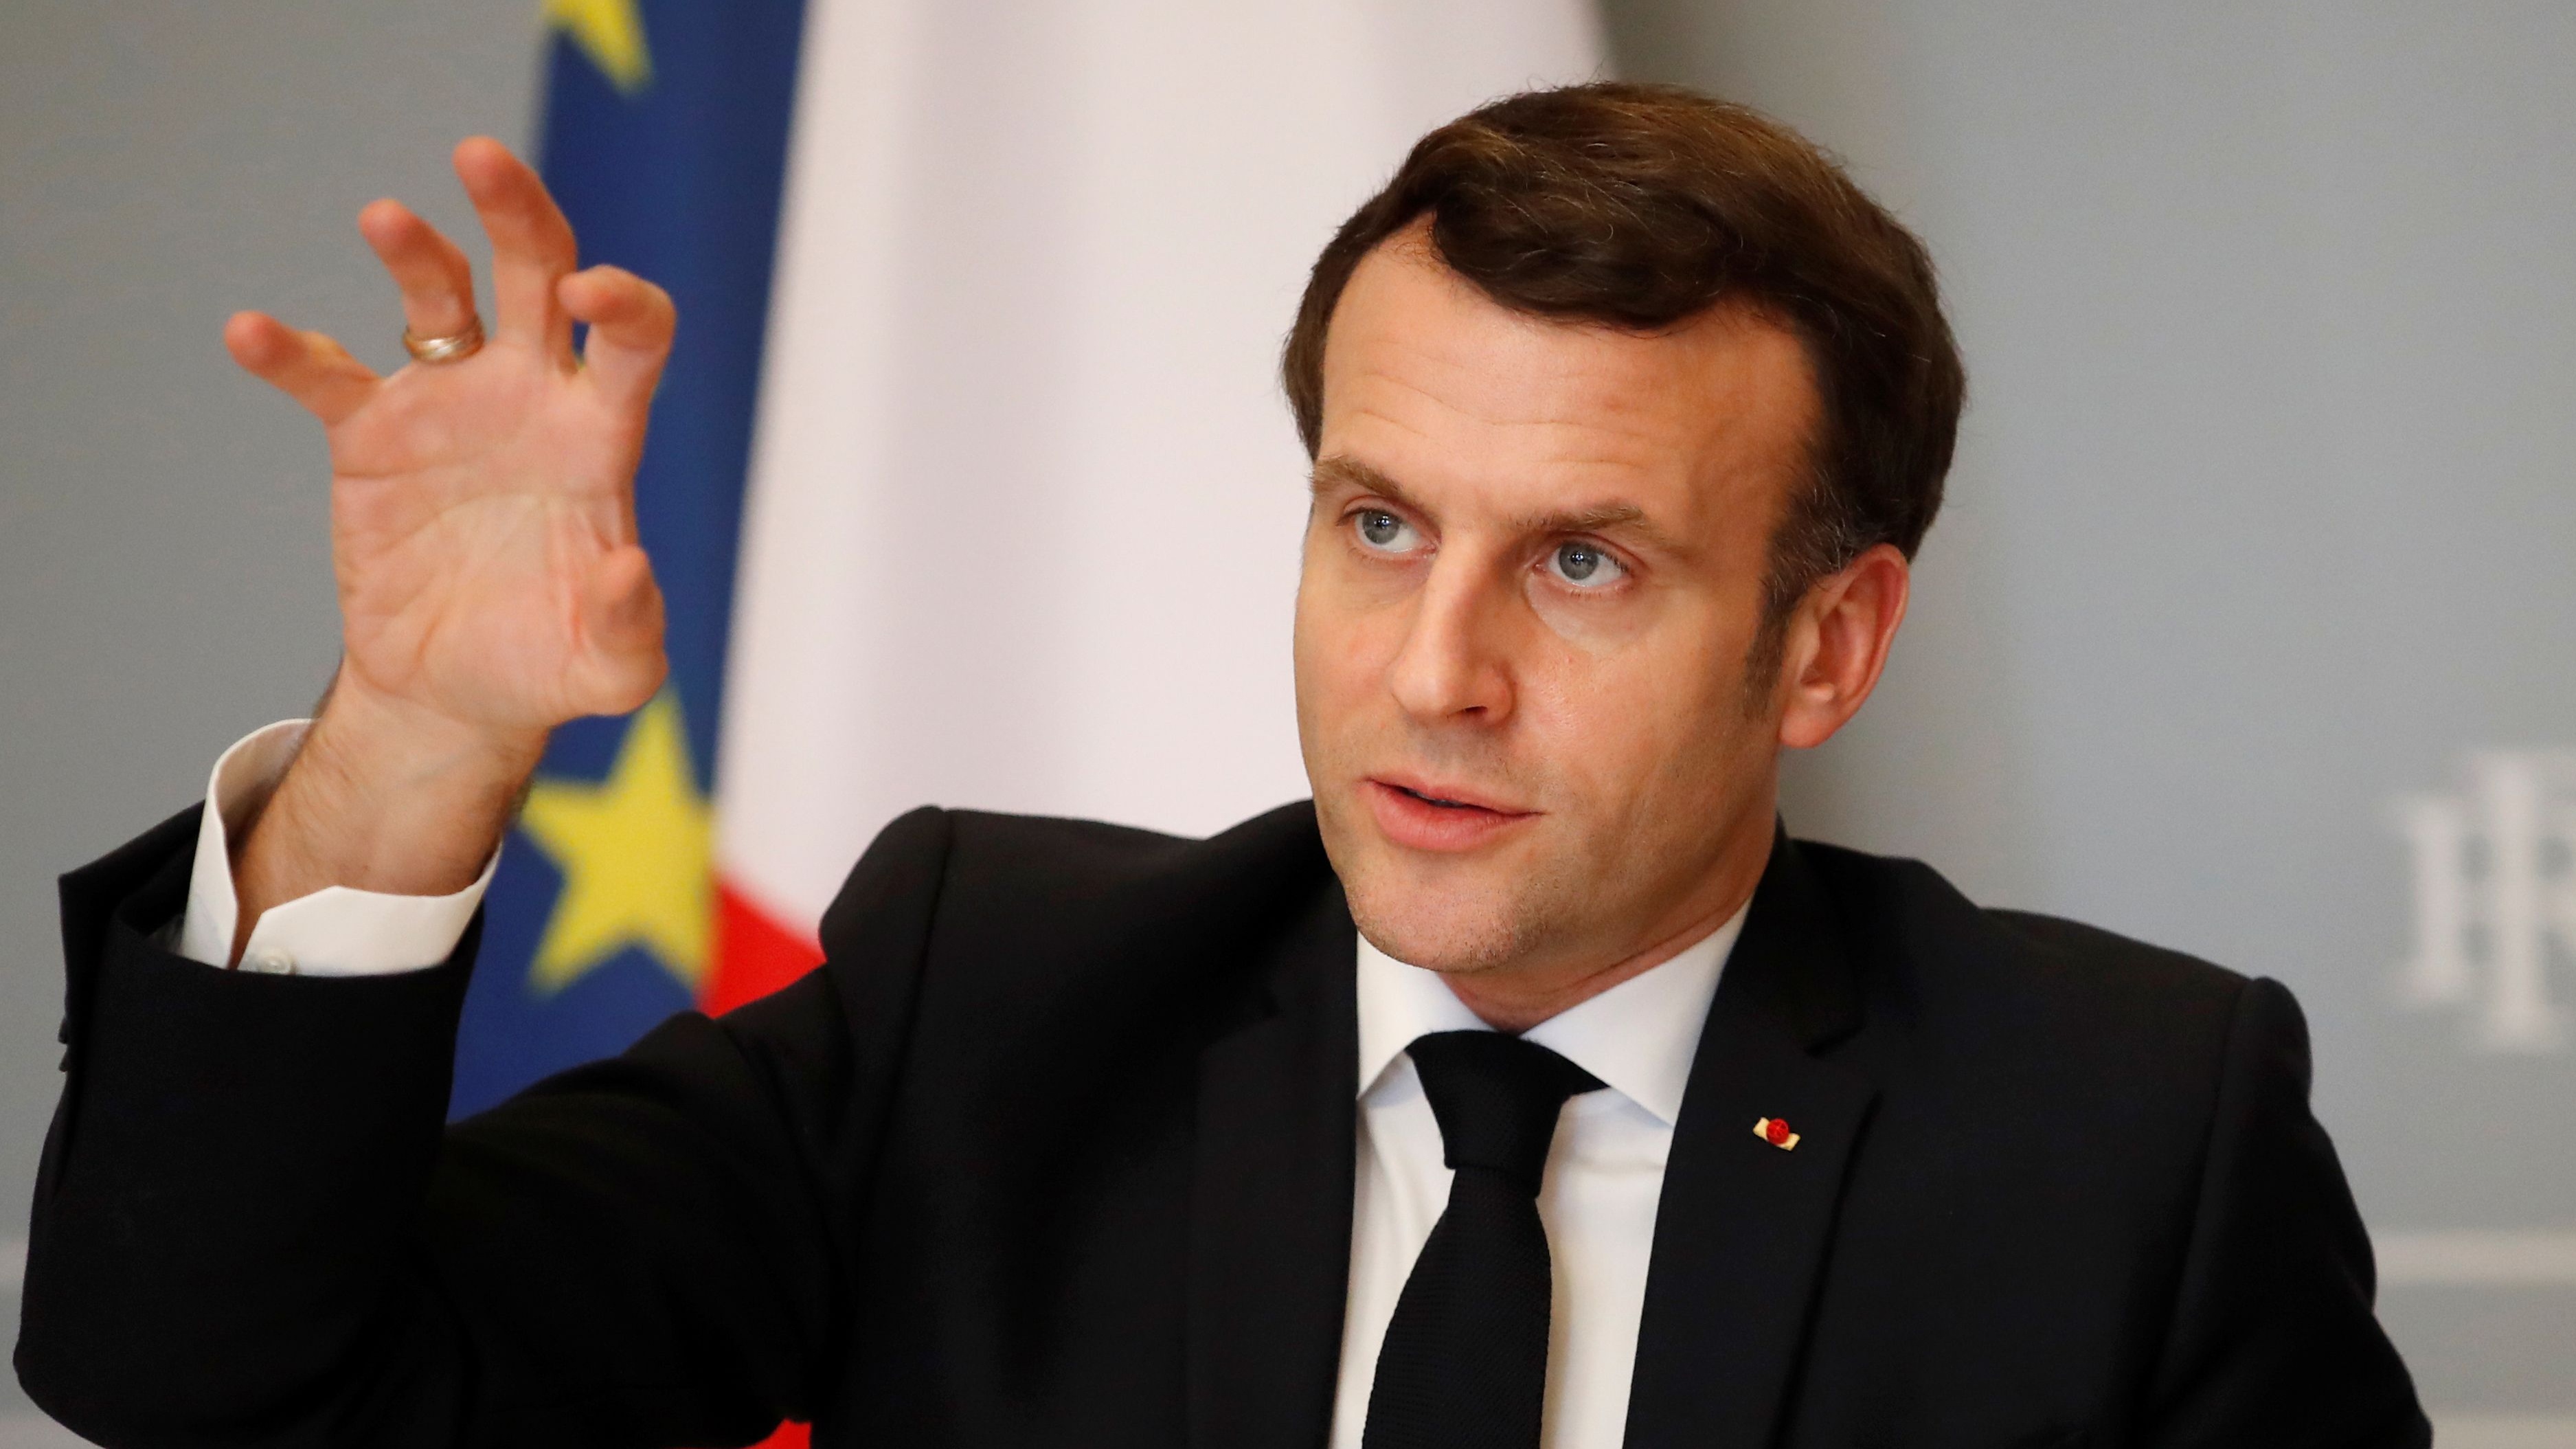 Emmanuel Macron gestures as he speaks during a video conference meeting.